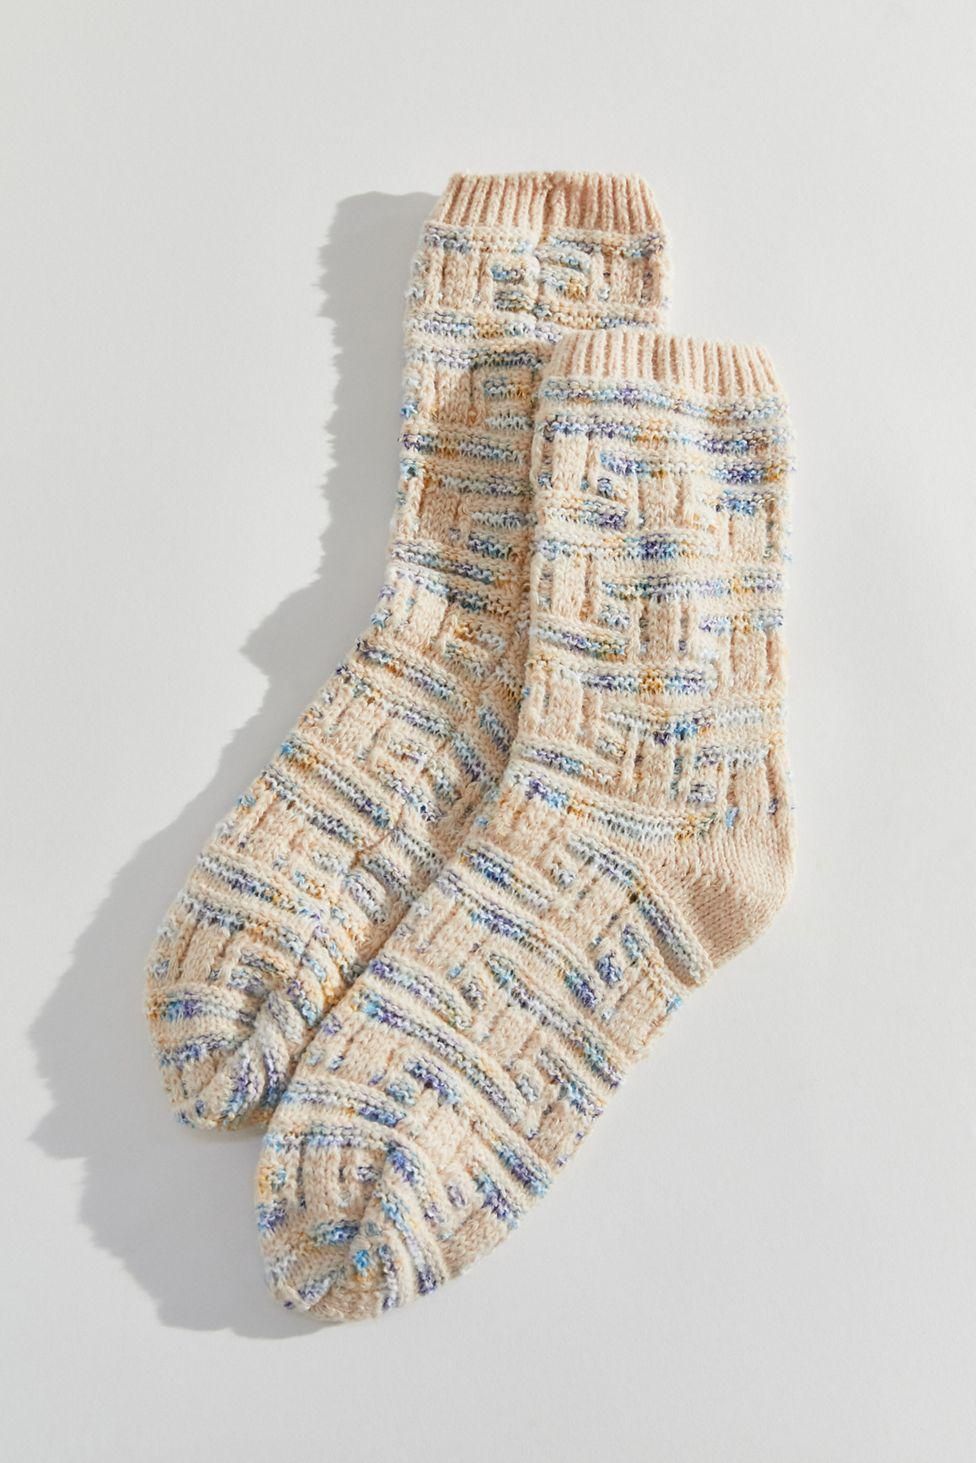 Fuzzy Socks To Keep You Warm — Brit + Co - Brit + Co